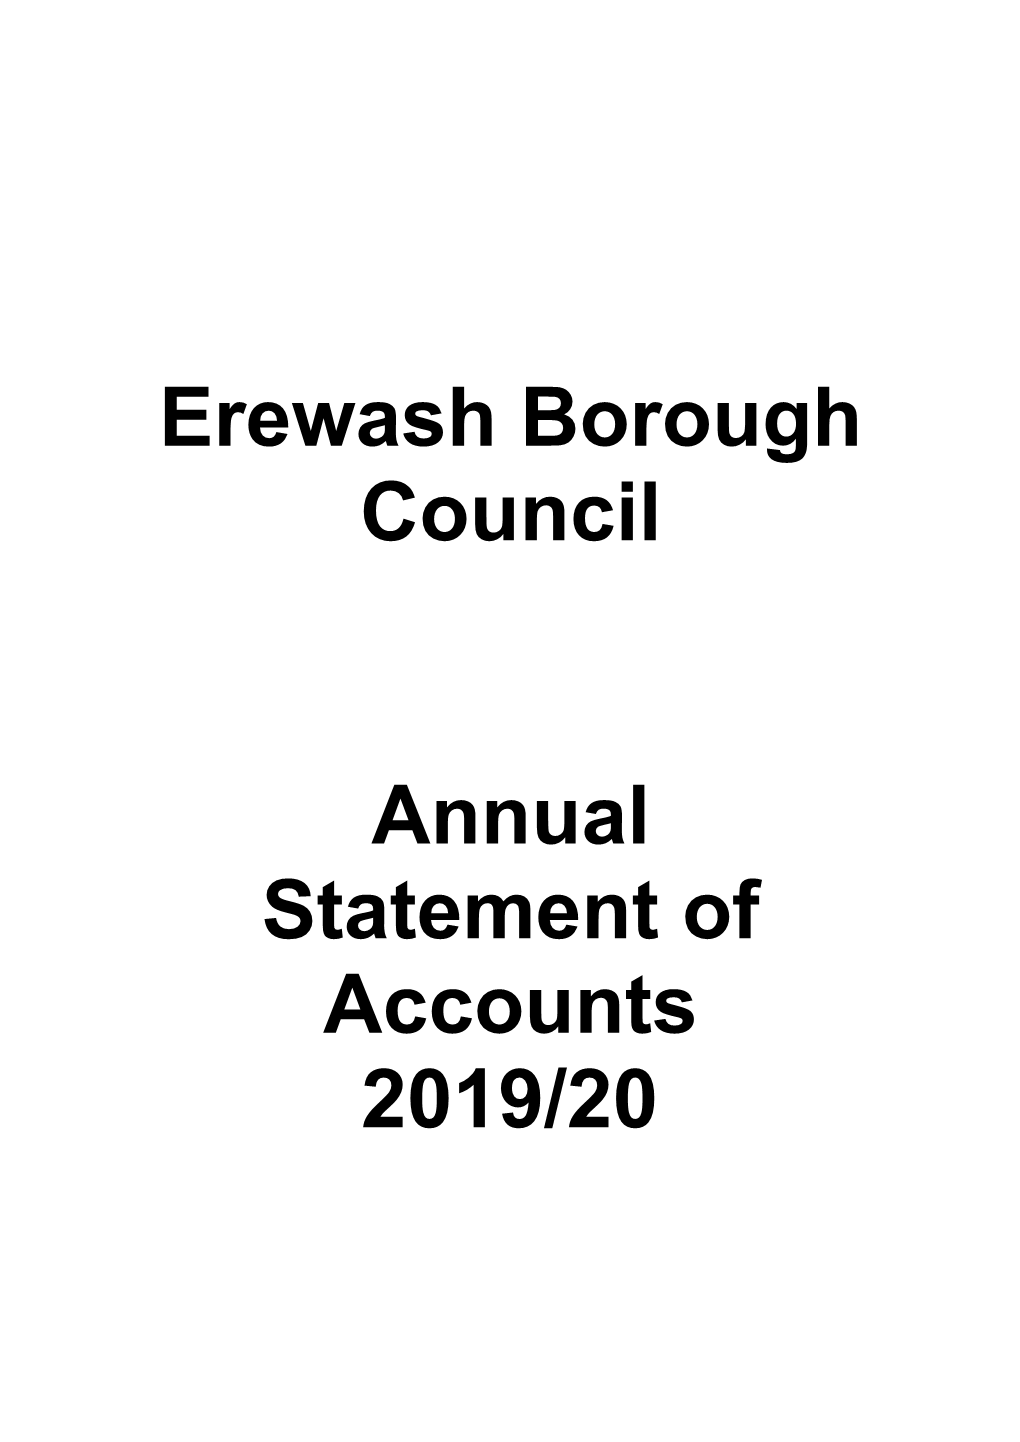 Erewash Borough Council Annual Statement of Accounts 2019/20